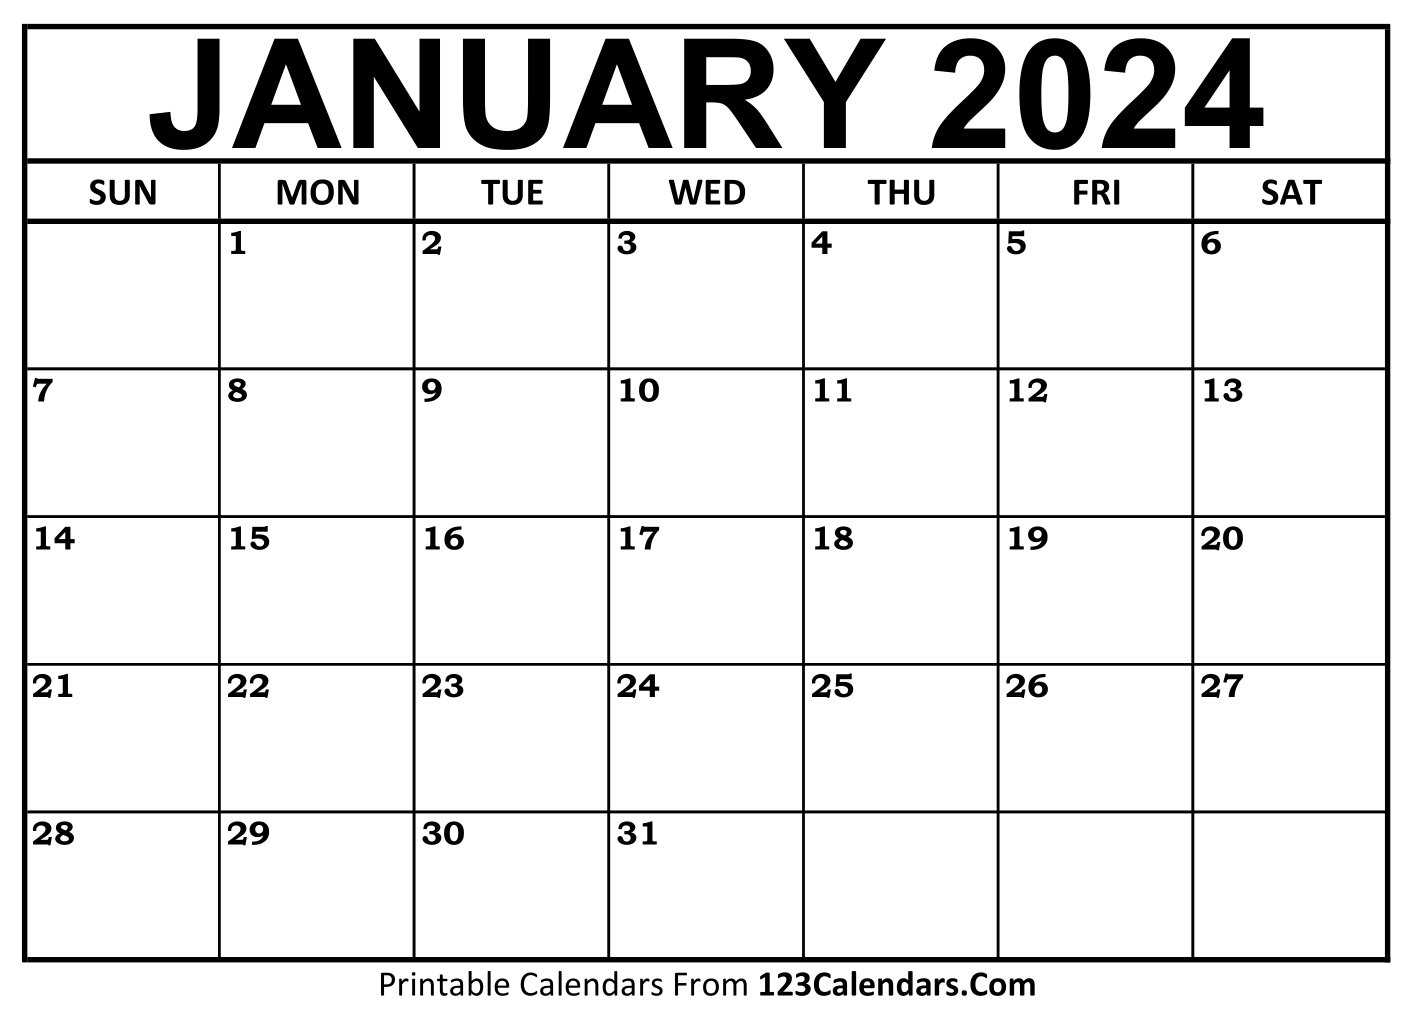 Printable January 2024 Calendar Templates - 123Calendars throughout Free Printable Blank Calendar January 2024 Calendar Template